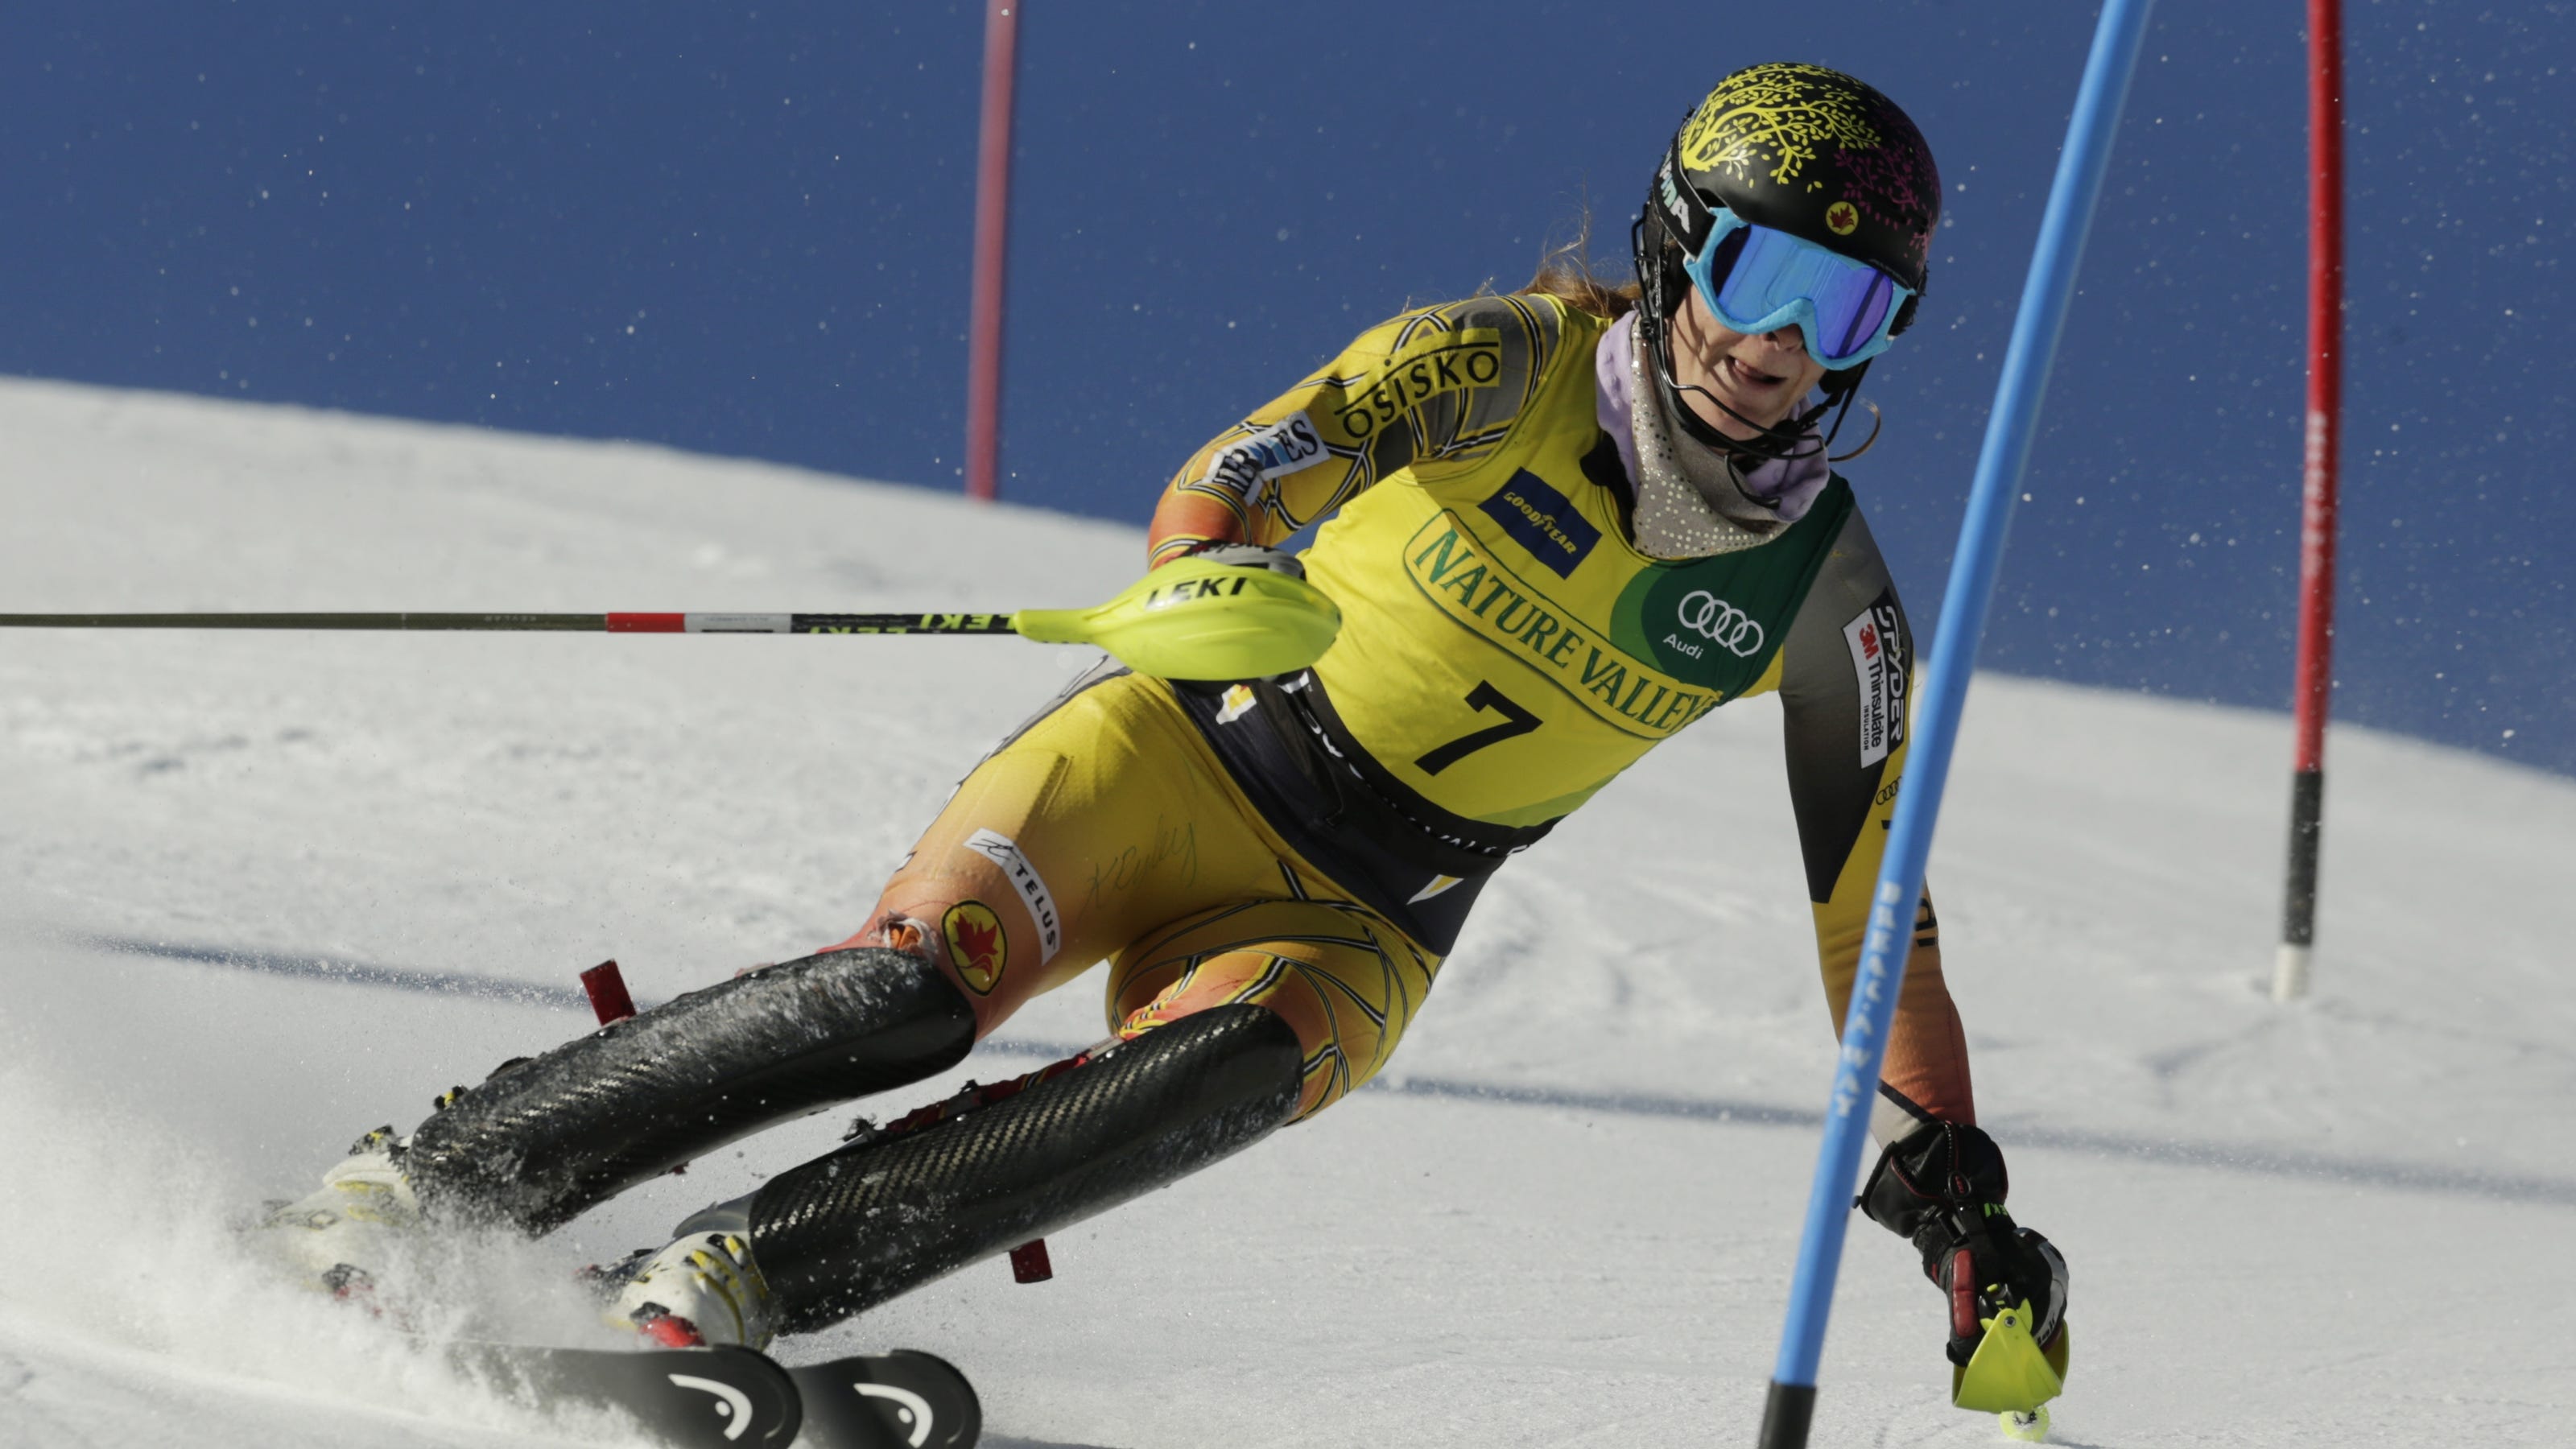 U.S. ski team sets high goals after stellar season